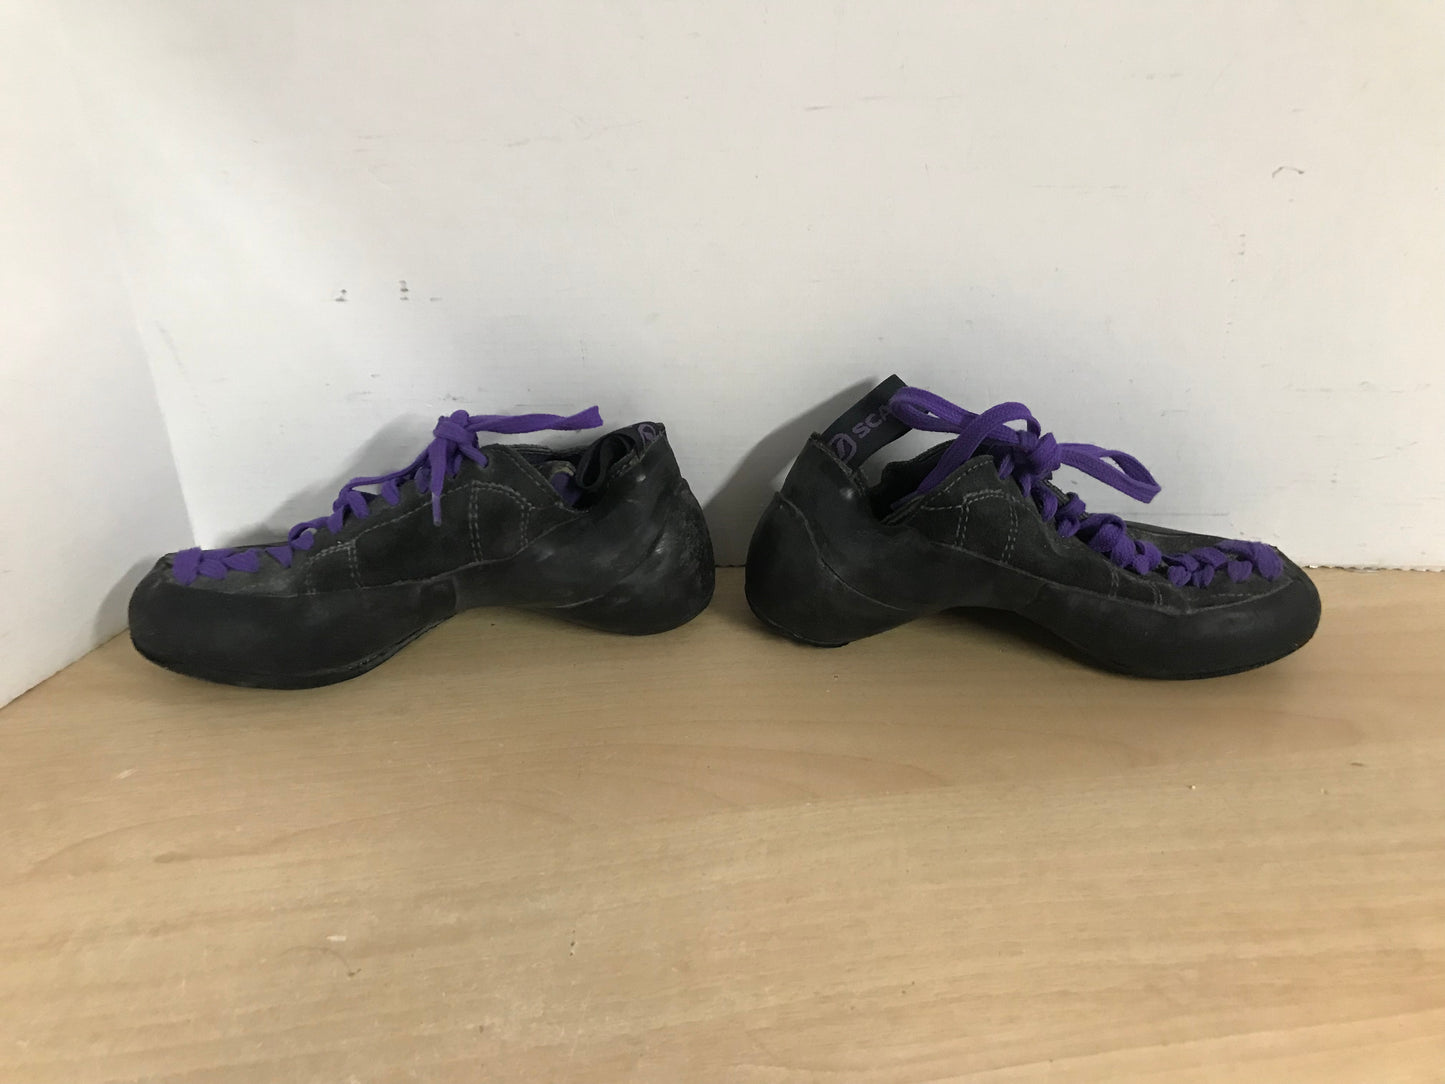 Rock Climbinging Shoes Child Size 5 Scarpa Leather Black Purple